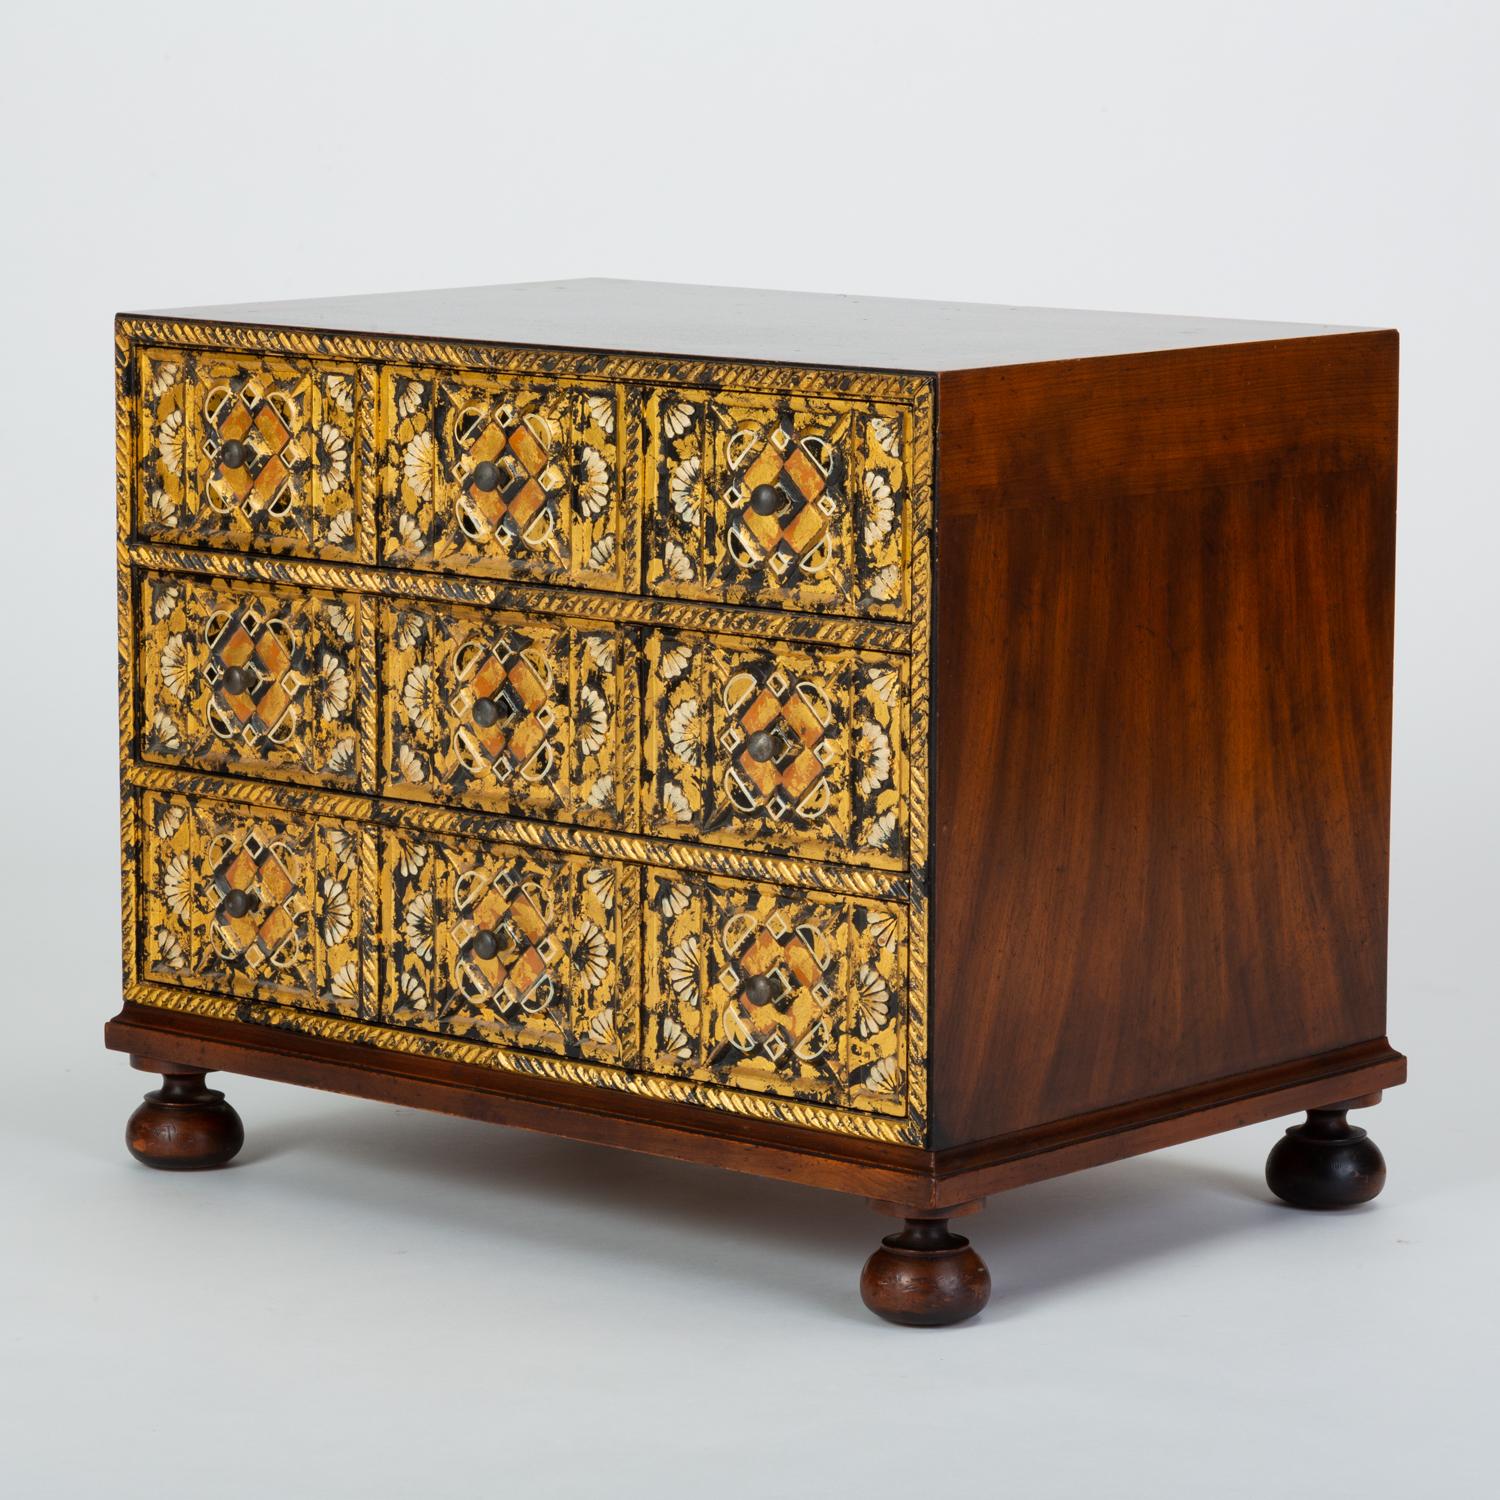 American Small Walnut Dresser in Spanish Revival Style by John Widdicomb